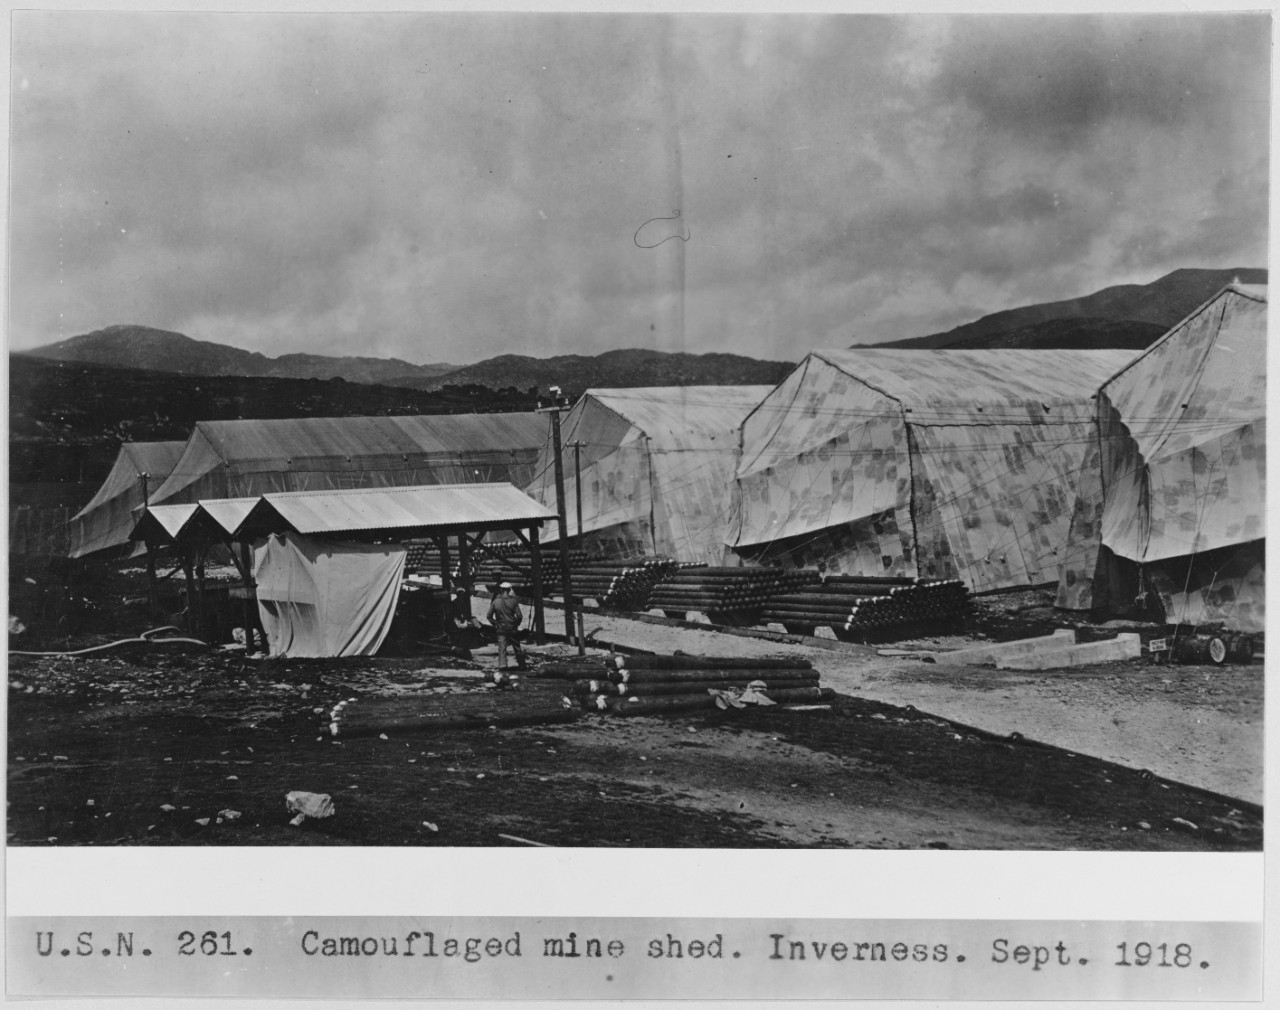 Camouflaged mine shed in Inverness, Scotland. September 1918. USN 261